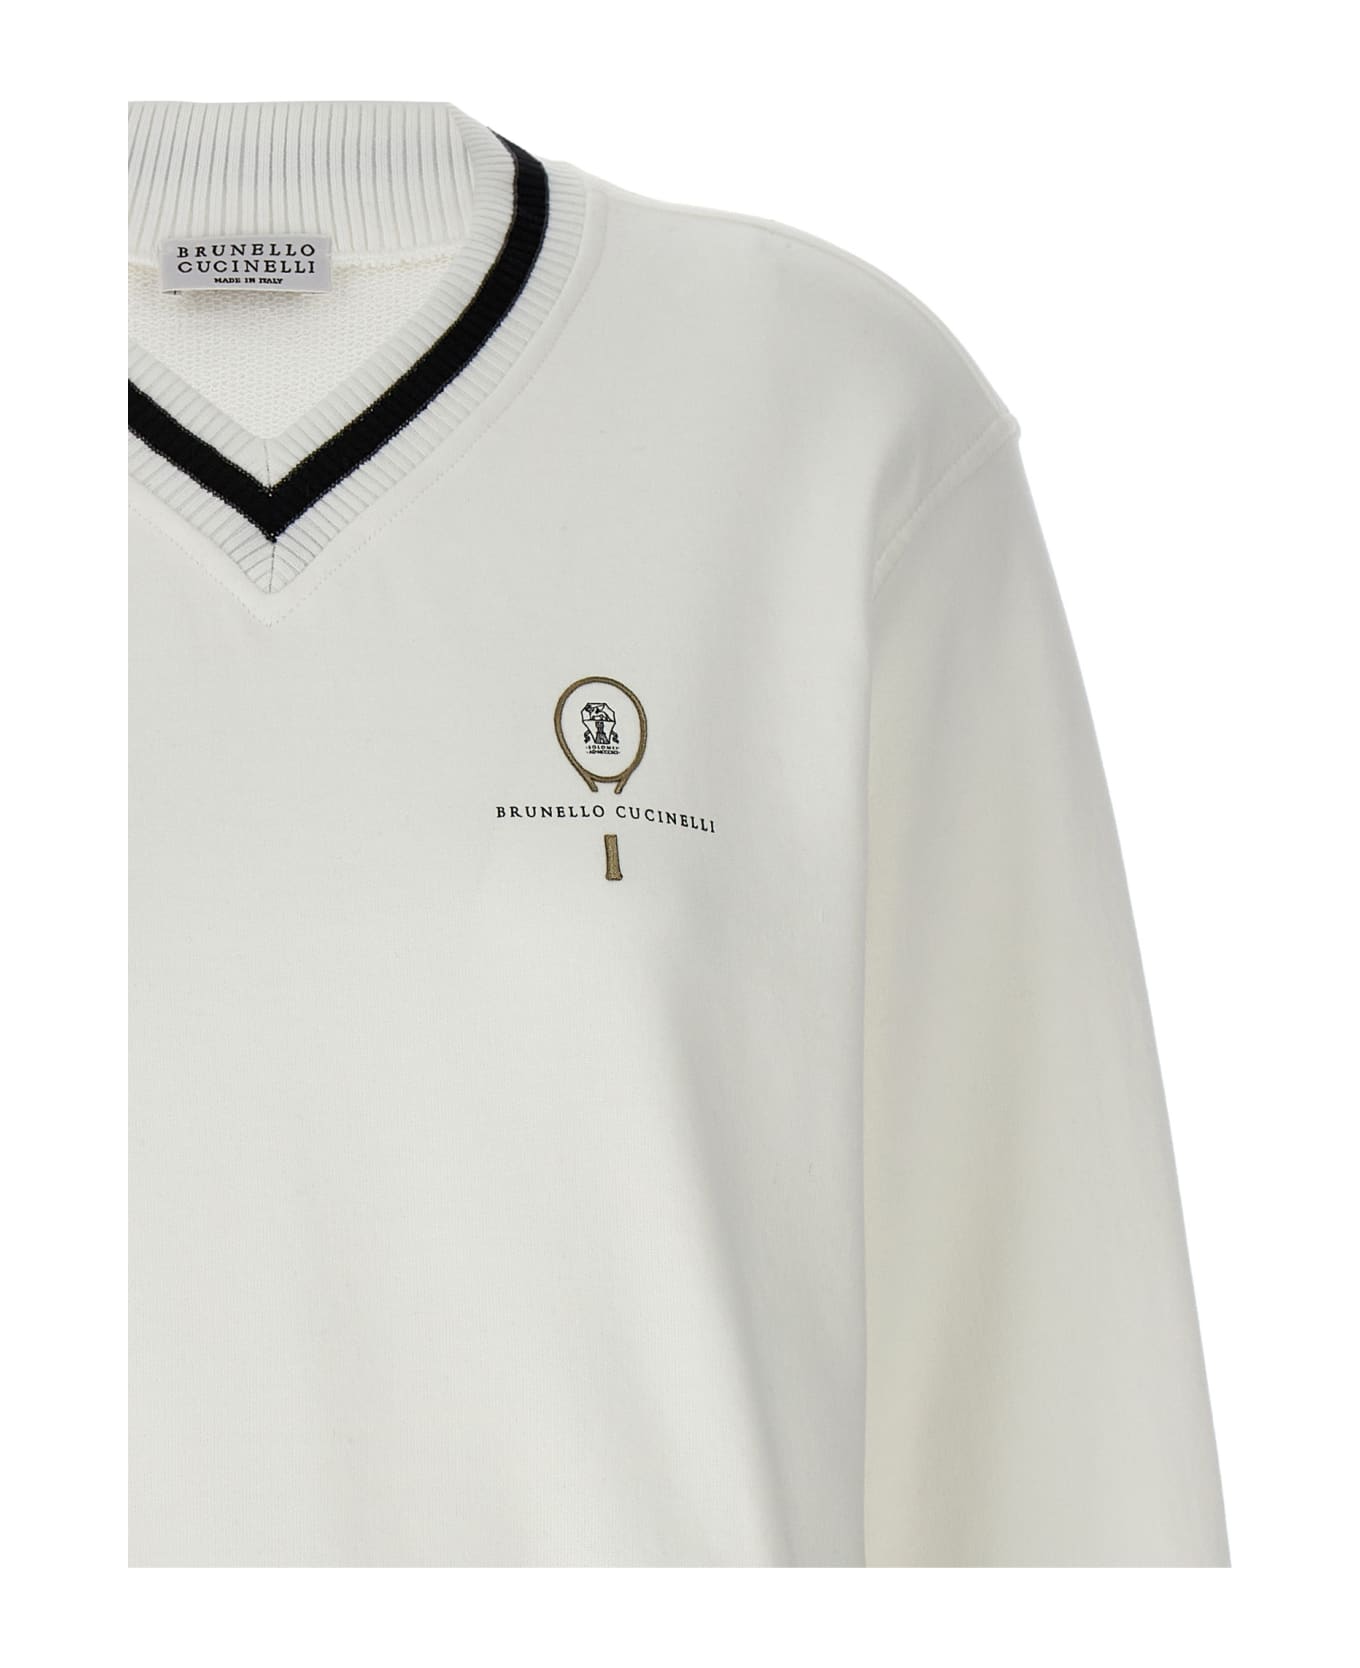 Brunello Cucinelli Logo Embroidery Sweatshirt - White/Black